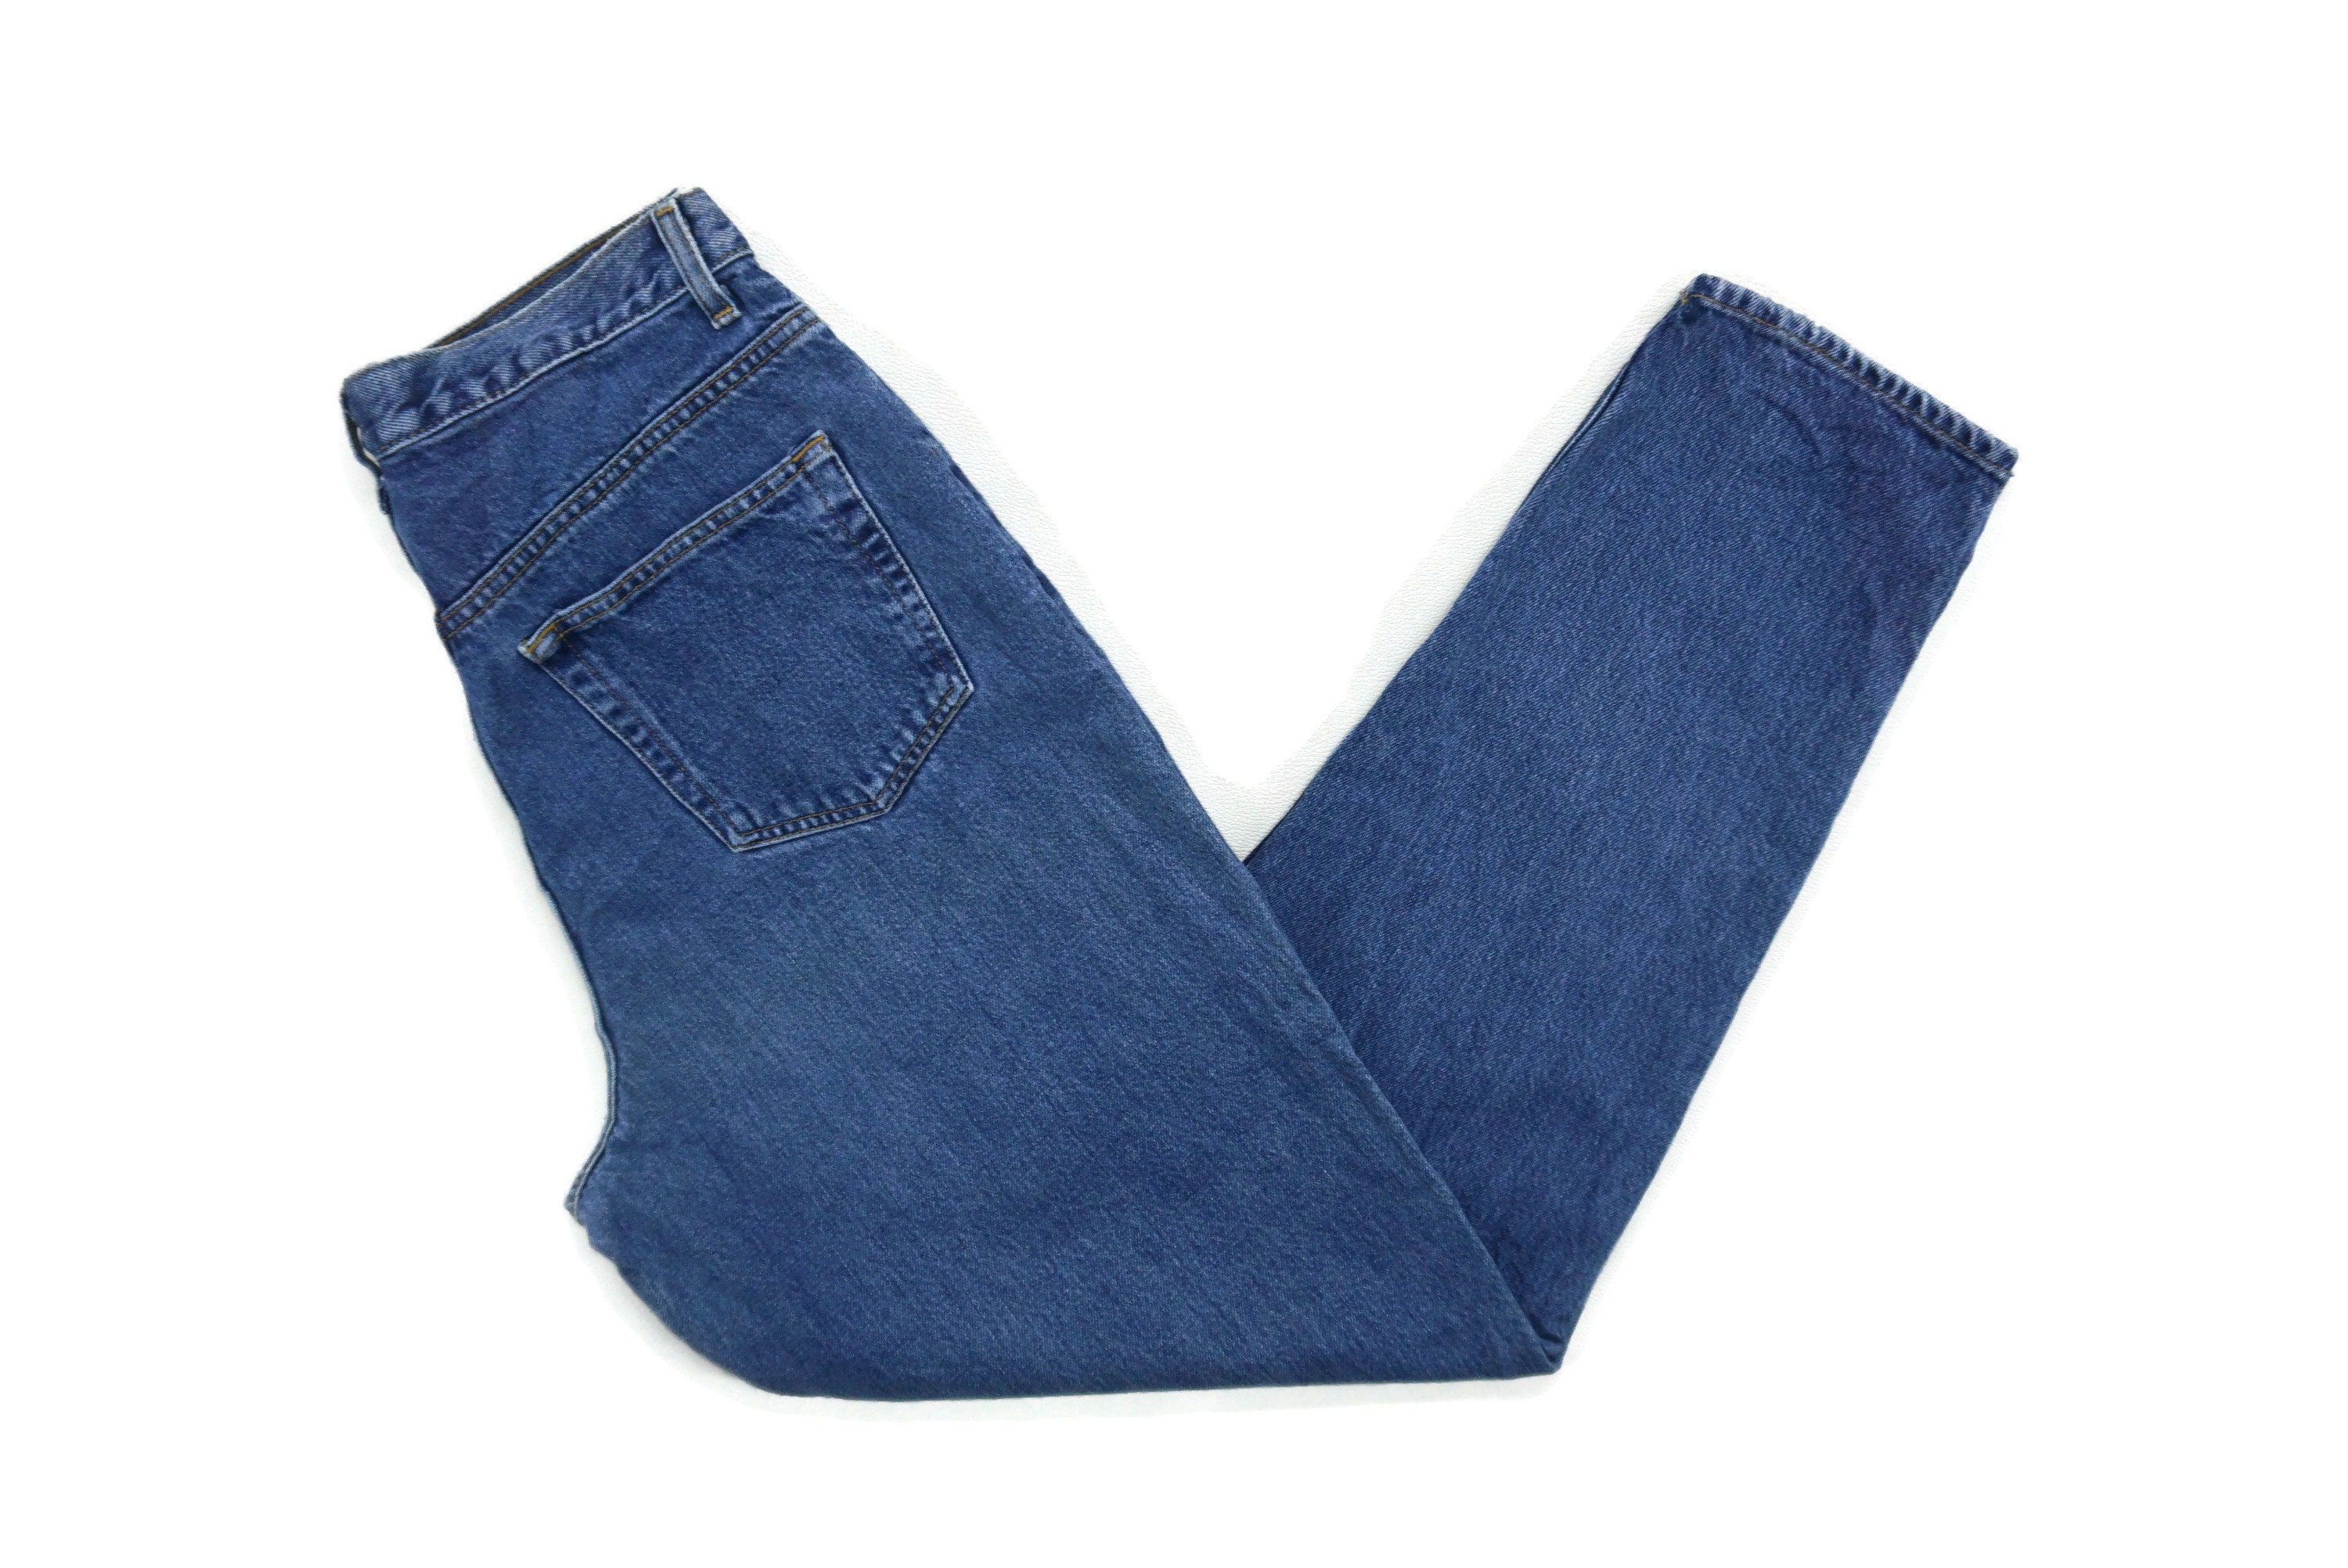 GAP Jeans Men's Size 16 W33xl33 Vintage Gap Reverse Jeans 